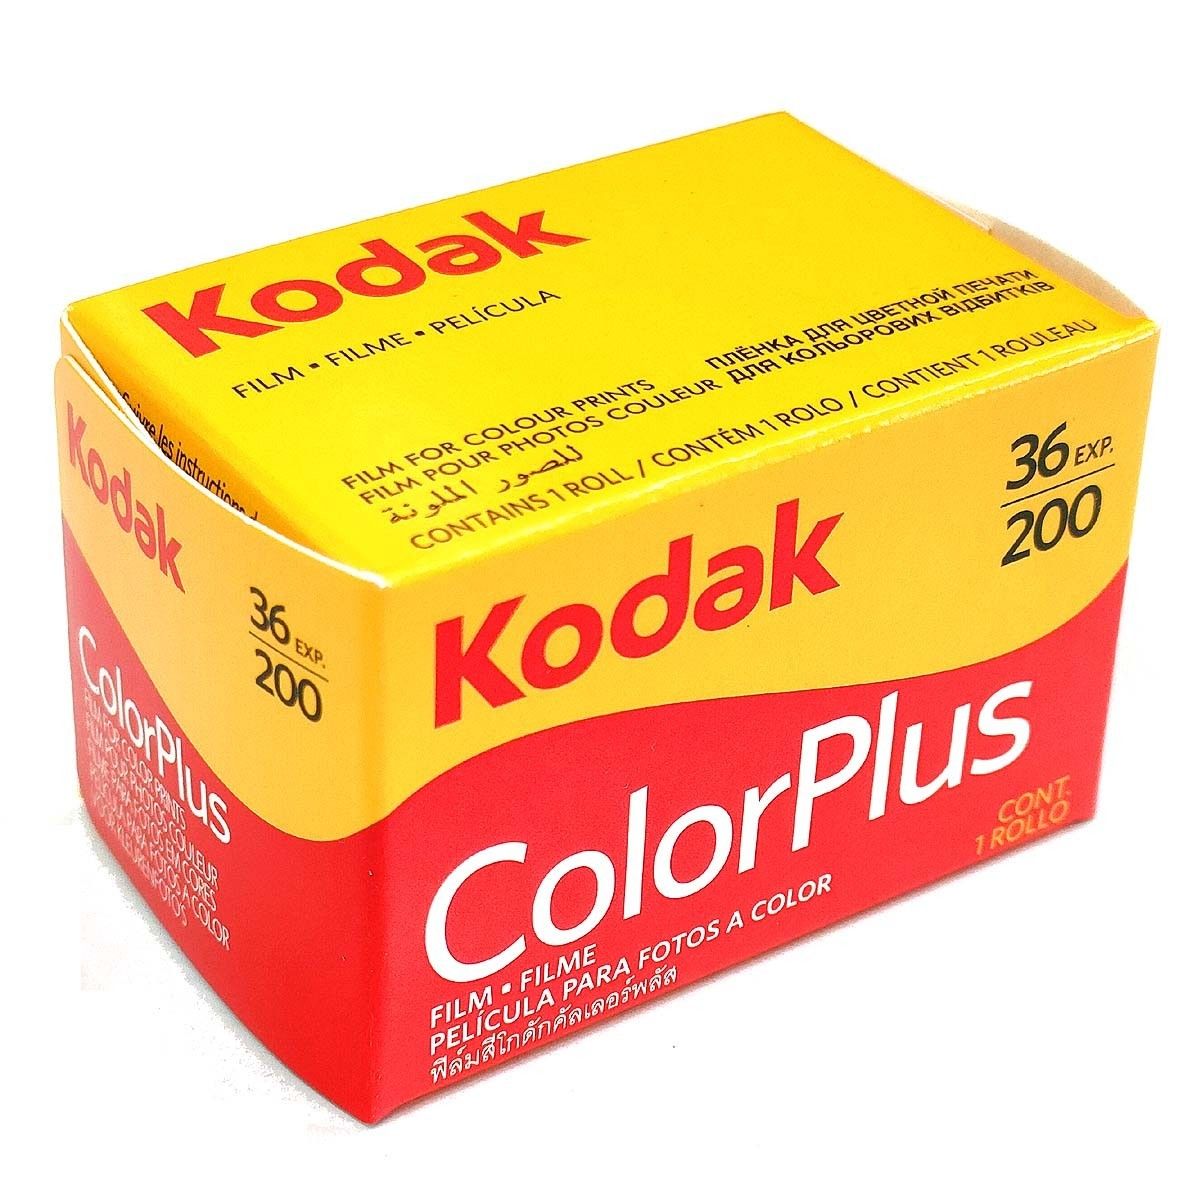 Color Plus 200-36枚撮【1本】カラーネガフィルム 135/35mm 感度200 Kodak コダック 新品